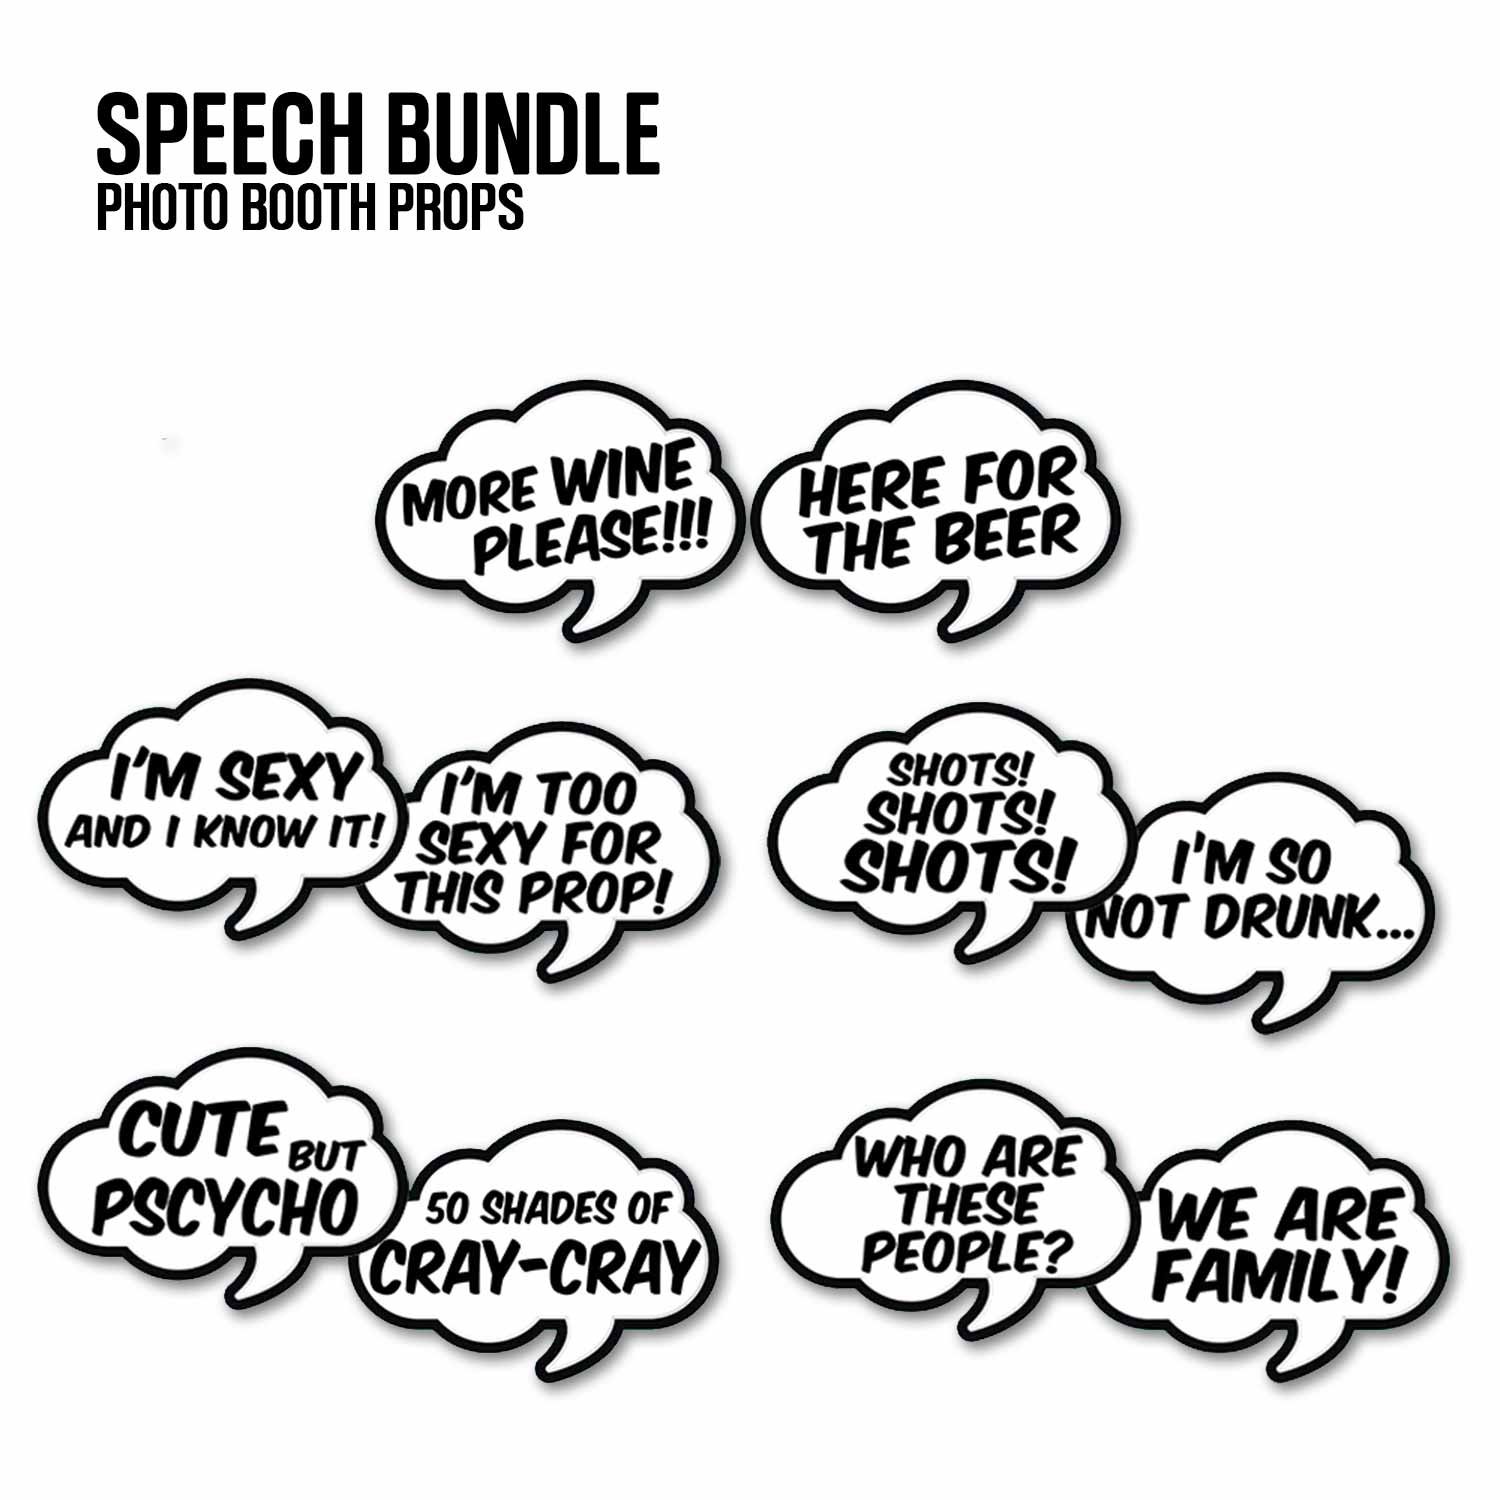 Speech-bundle.jpg